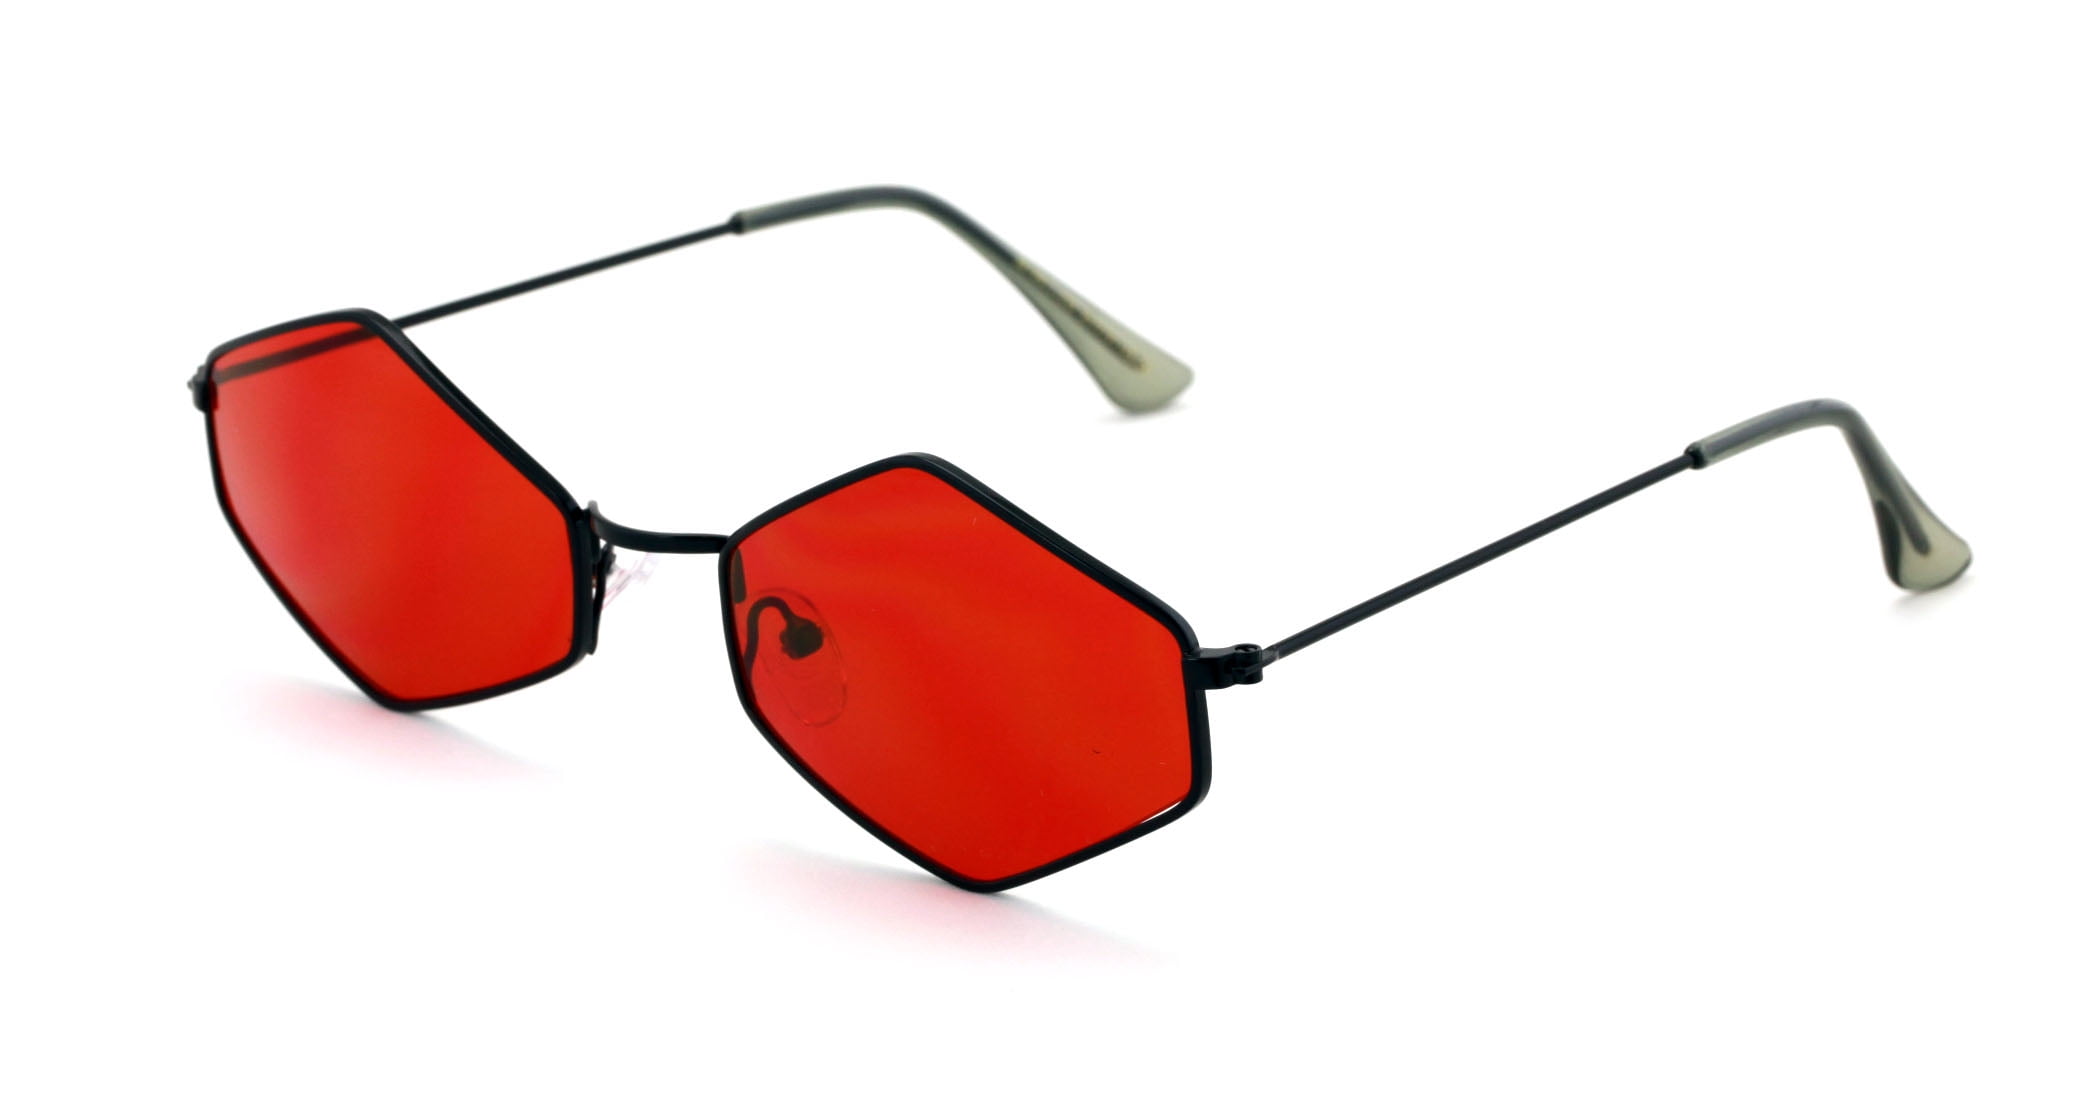 ZAMGIC Small Metal Polygon Polarized Sunglasses Vintage Hexagonal Lightweight Style for Men and Women 